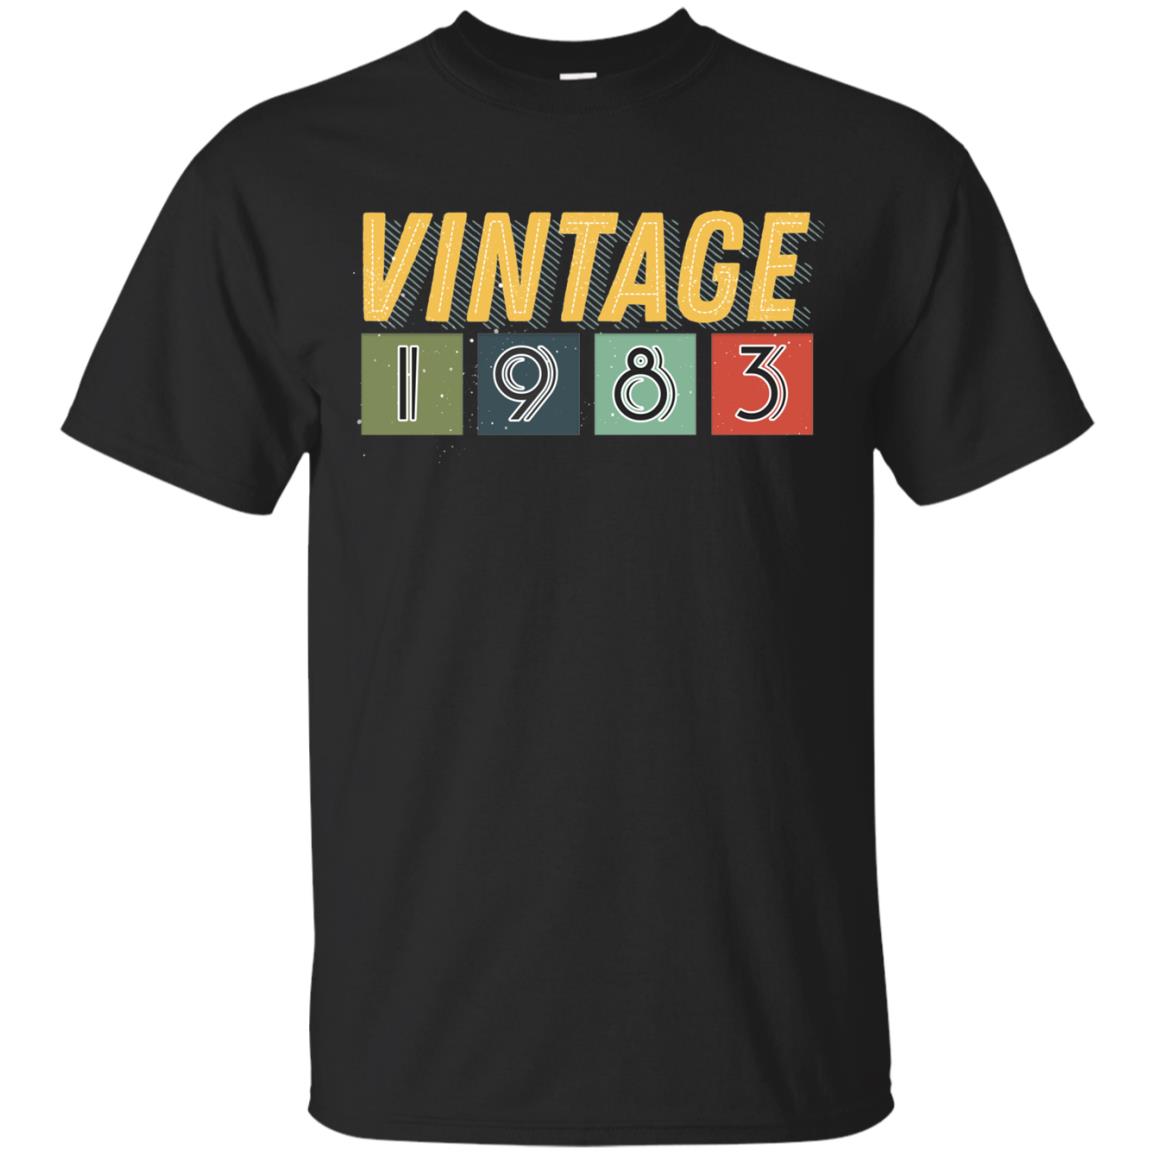 Vintage 1983 35th Birthday Gift Shirt For Mens Or WomensG200 Gildan Ultra Cotton T-Shirt